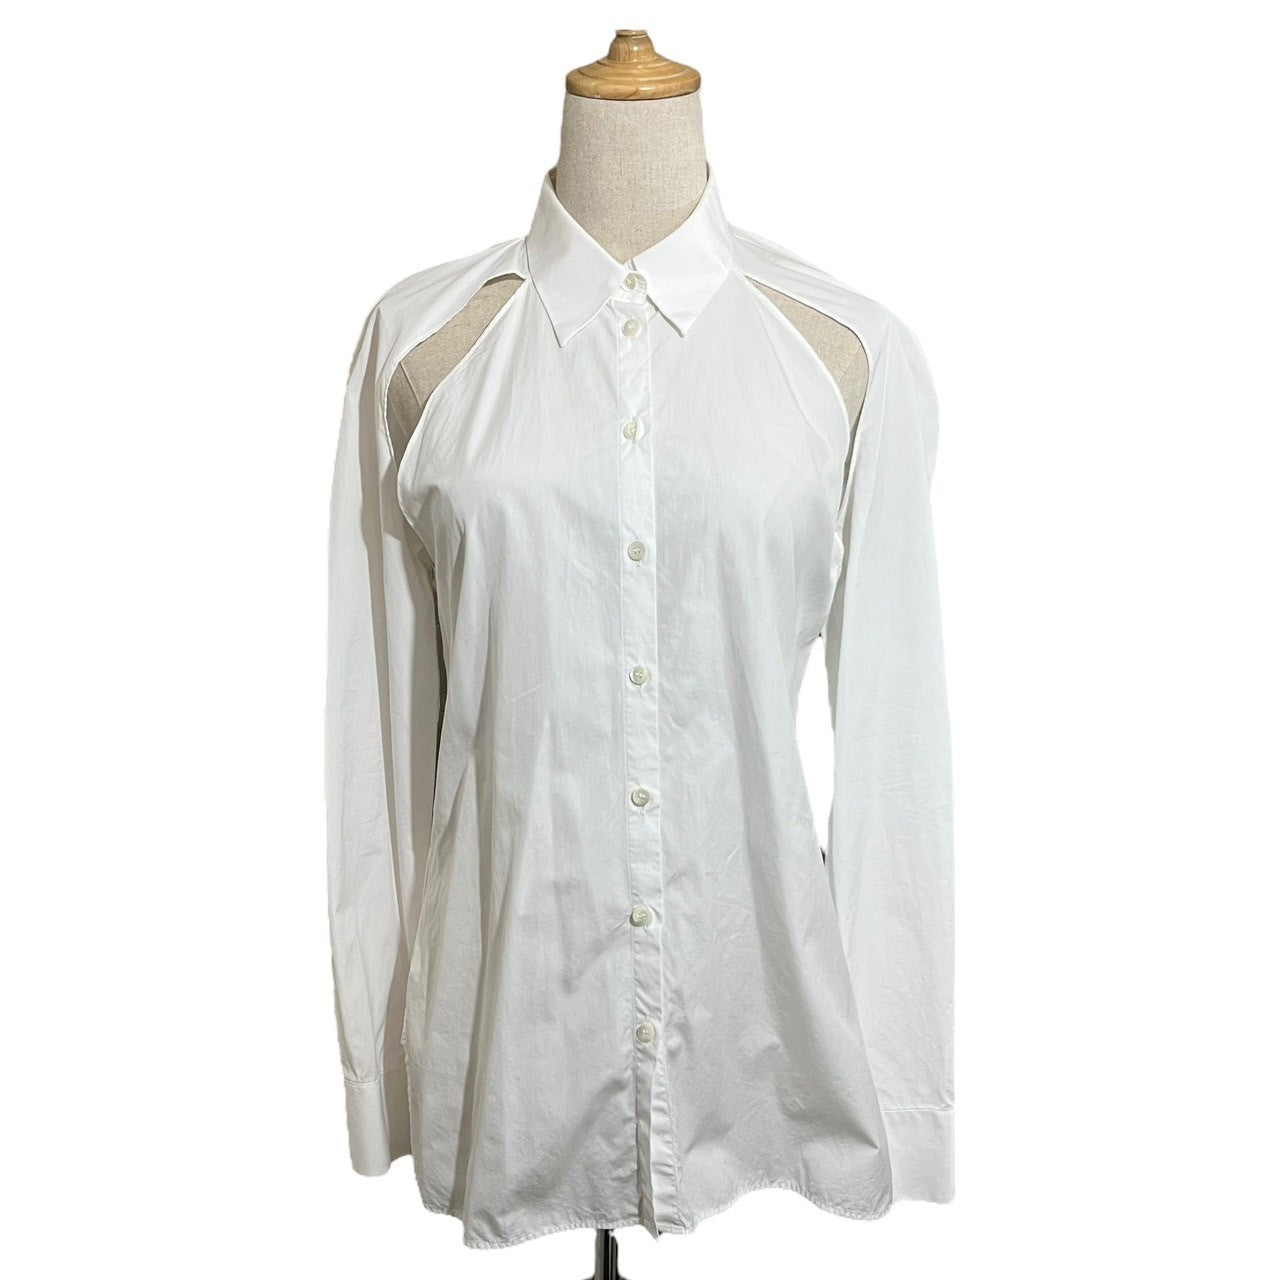 MAISON MARGIELA(メゾンマルジェラ) 18SS Back hole, side cut, long sleeve shirt 背面・袖カット 長袖 シャツ S51DL0247 S44720 40(L程度) ホワイト